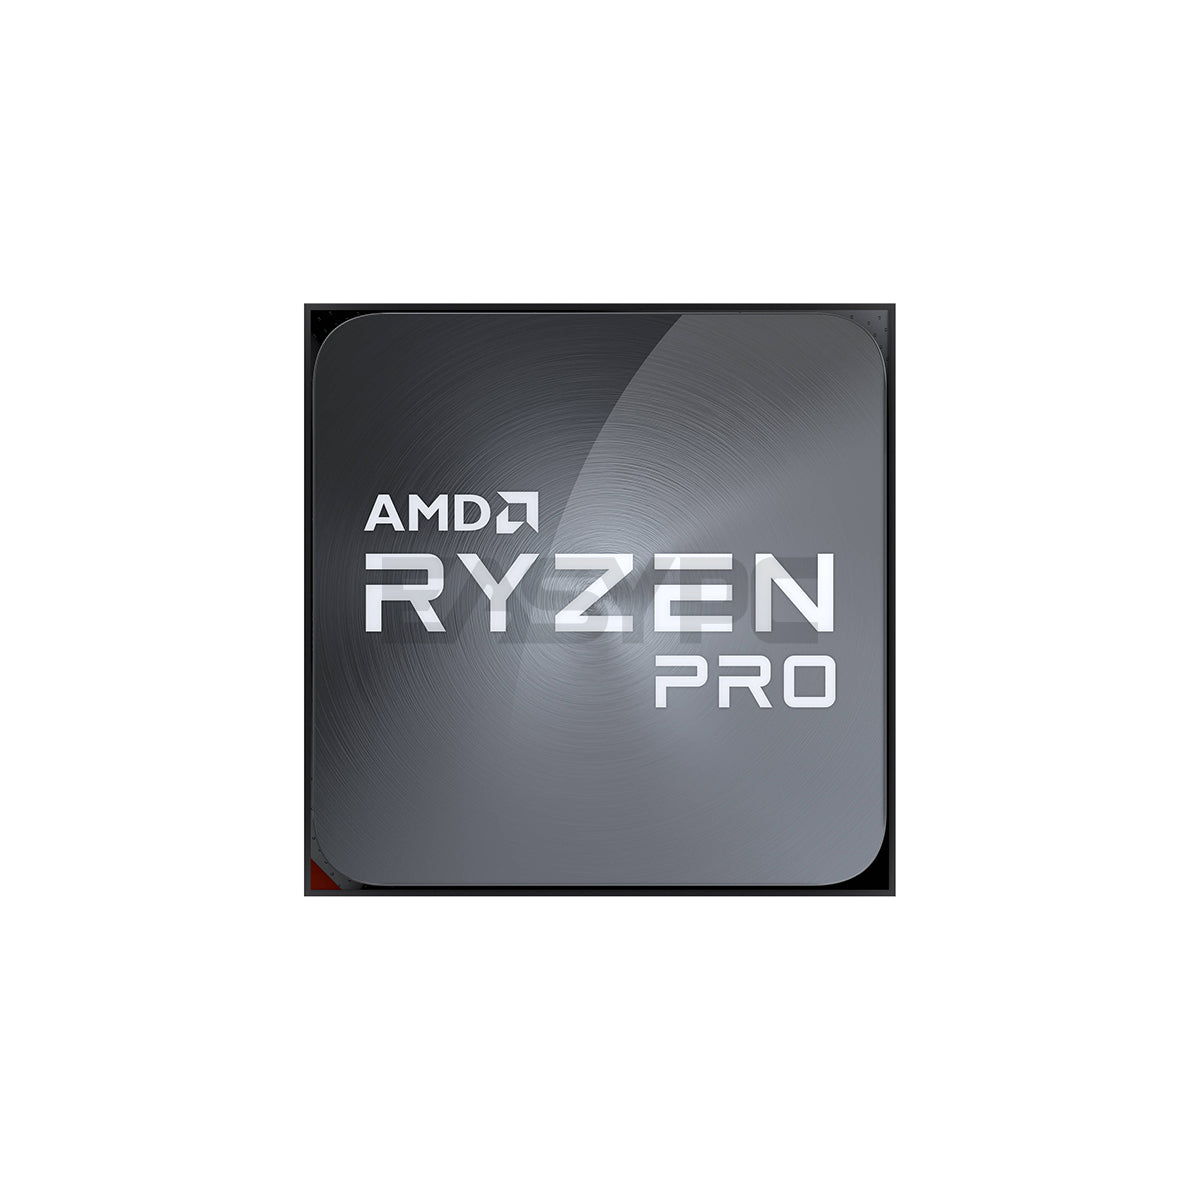 AMD Ryzen 7 Pro 4750G Socket Am4, 16 Thread, 8 CPU Cores, 3.6ghz with Radeon Vega 8 PCIe 3.0 Processor - No Box